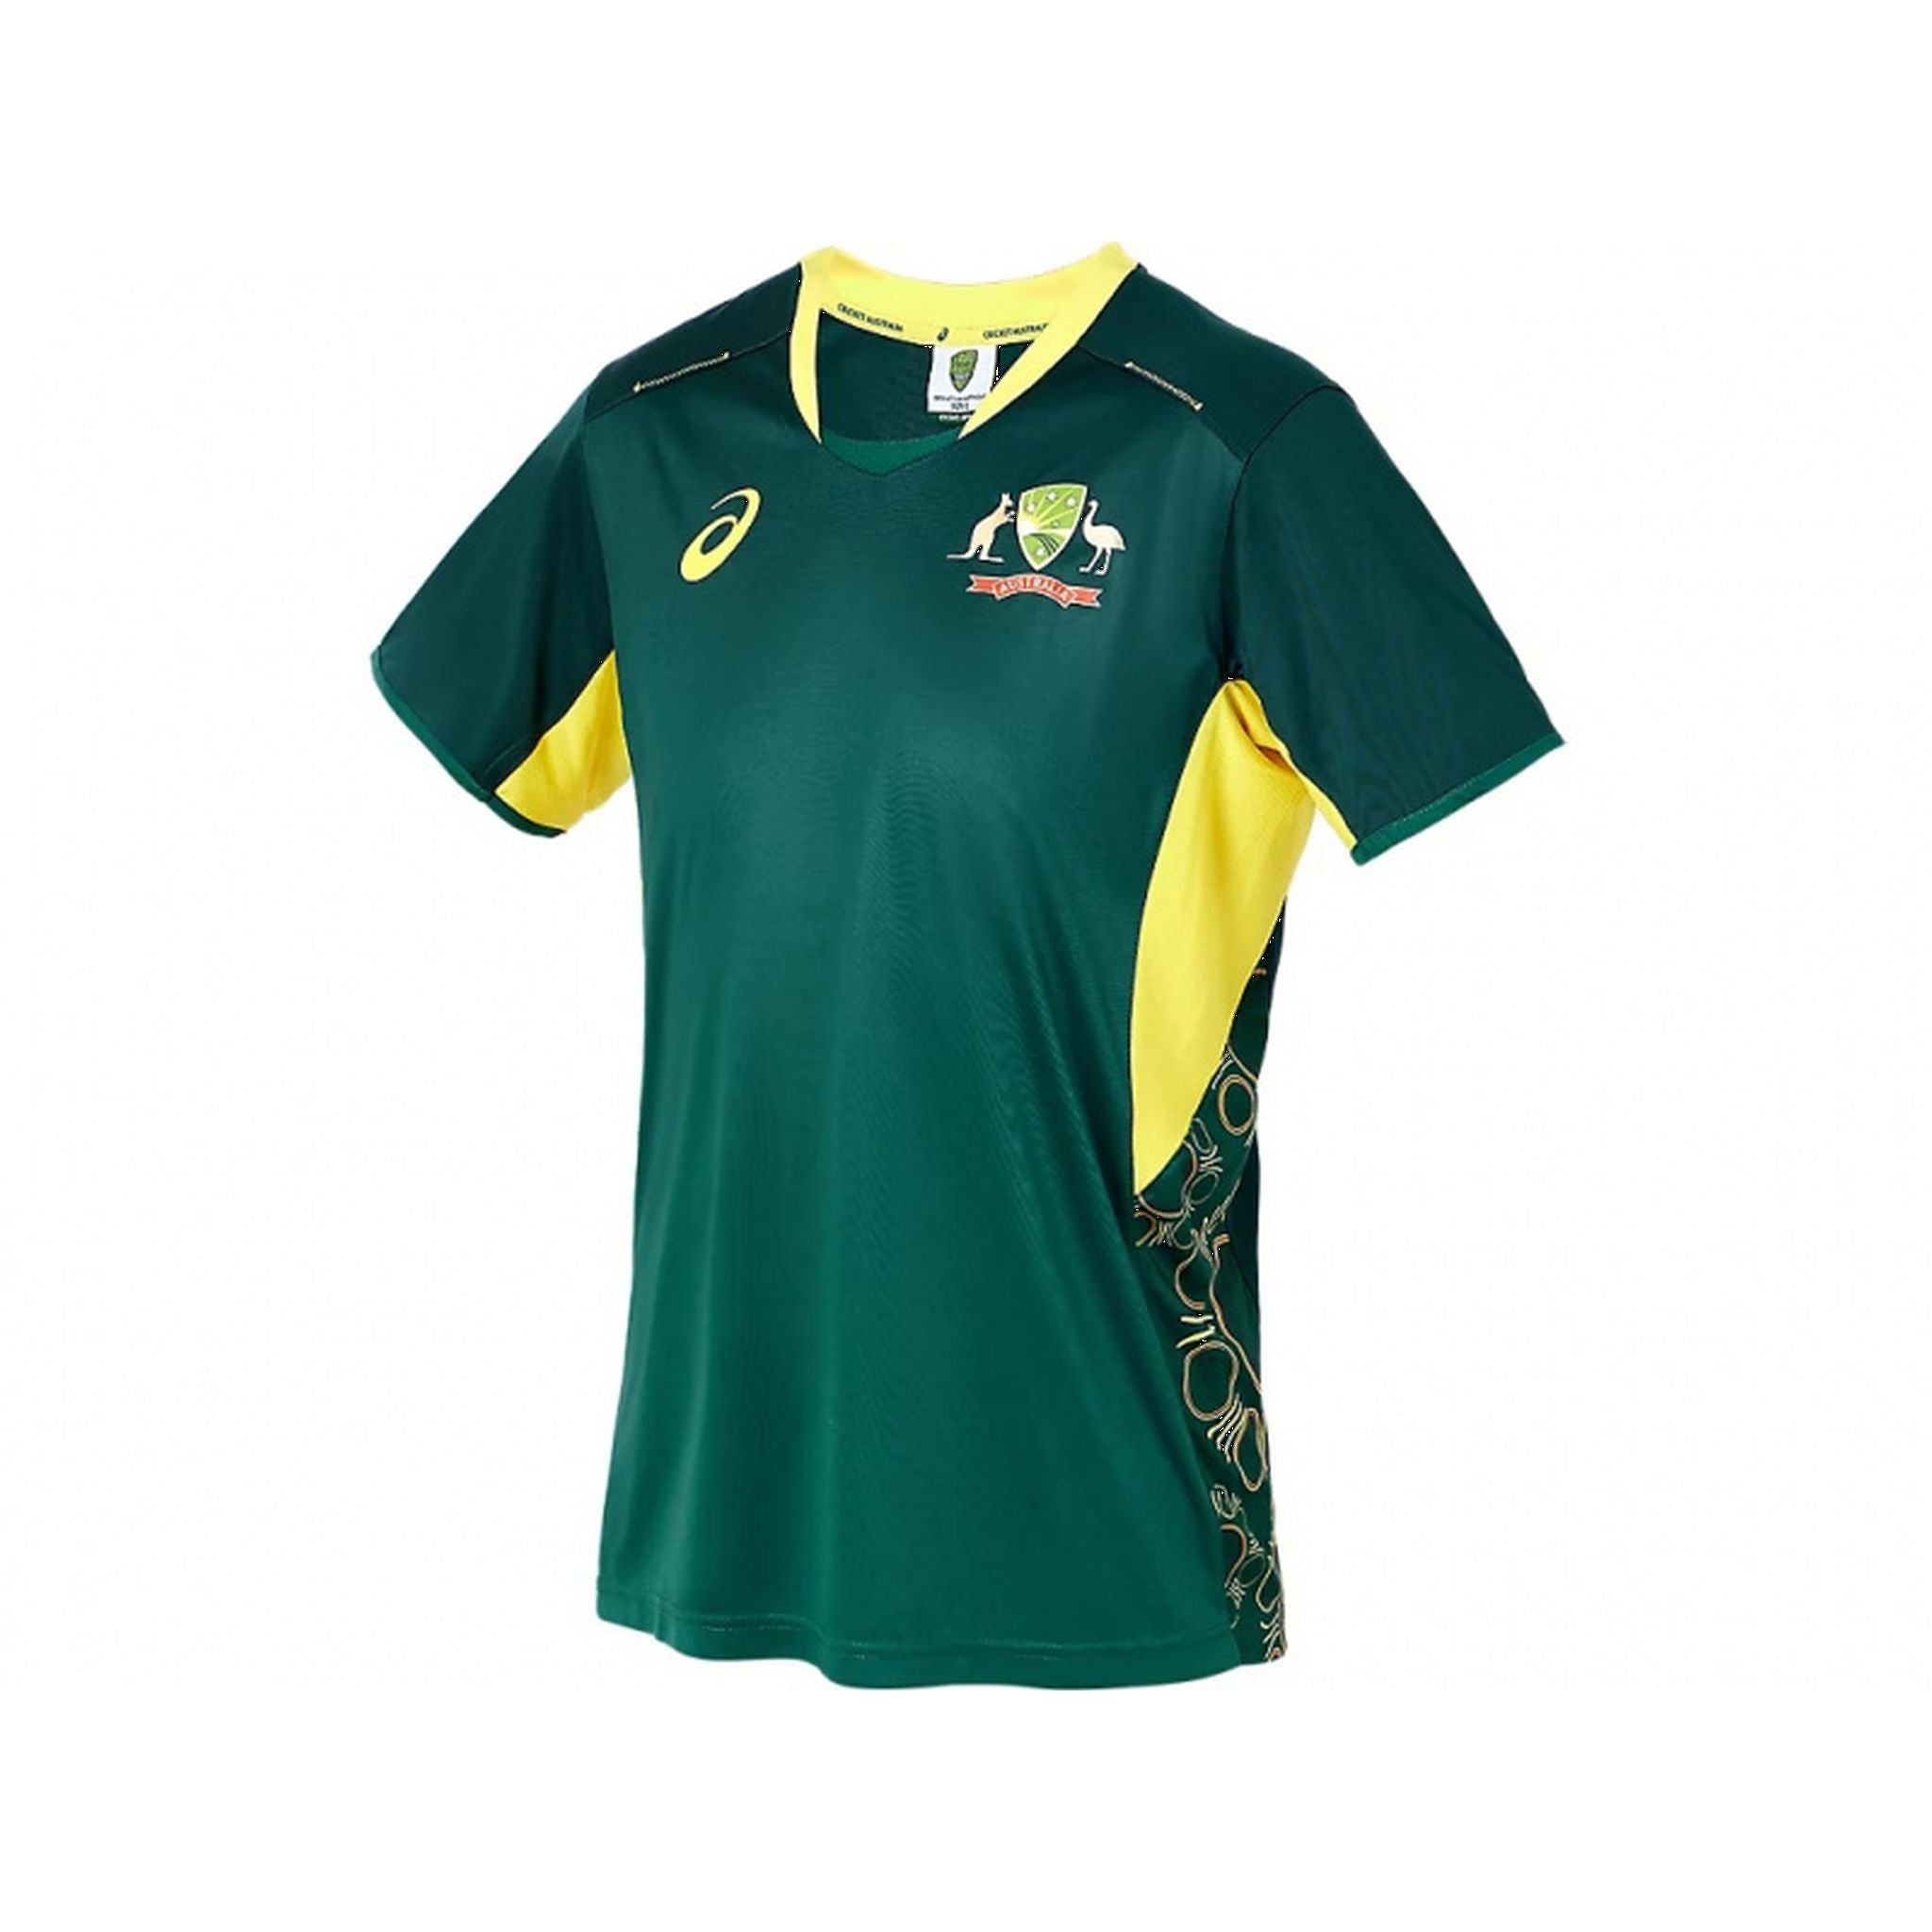 ASICS Cricket Australia Youth Replica T20 Shirt